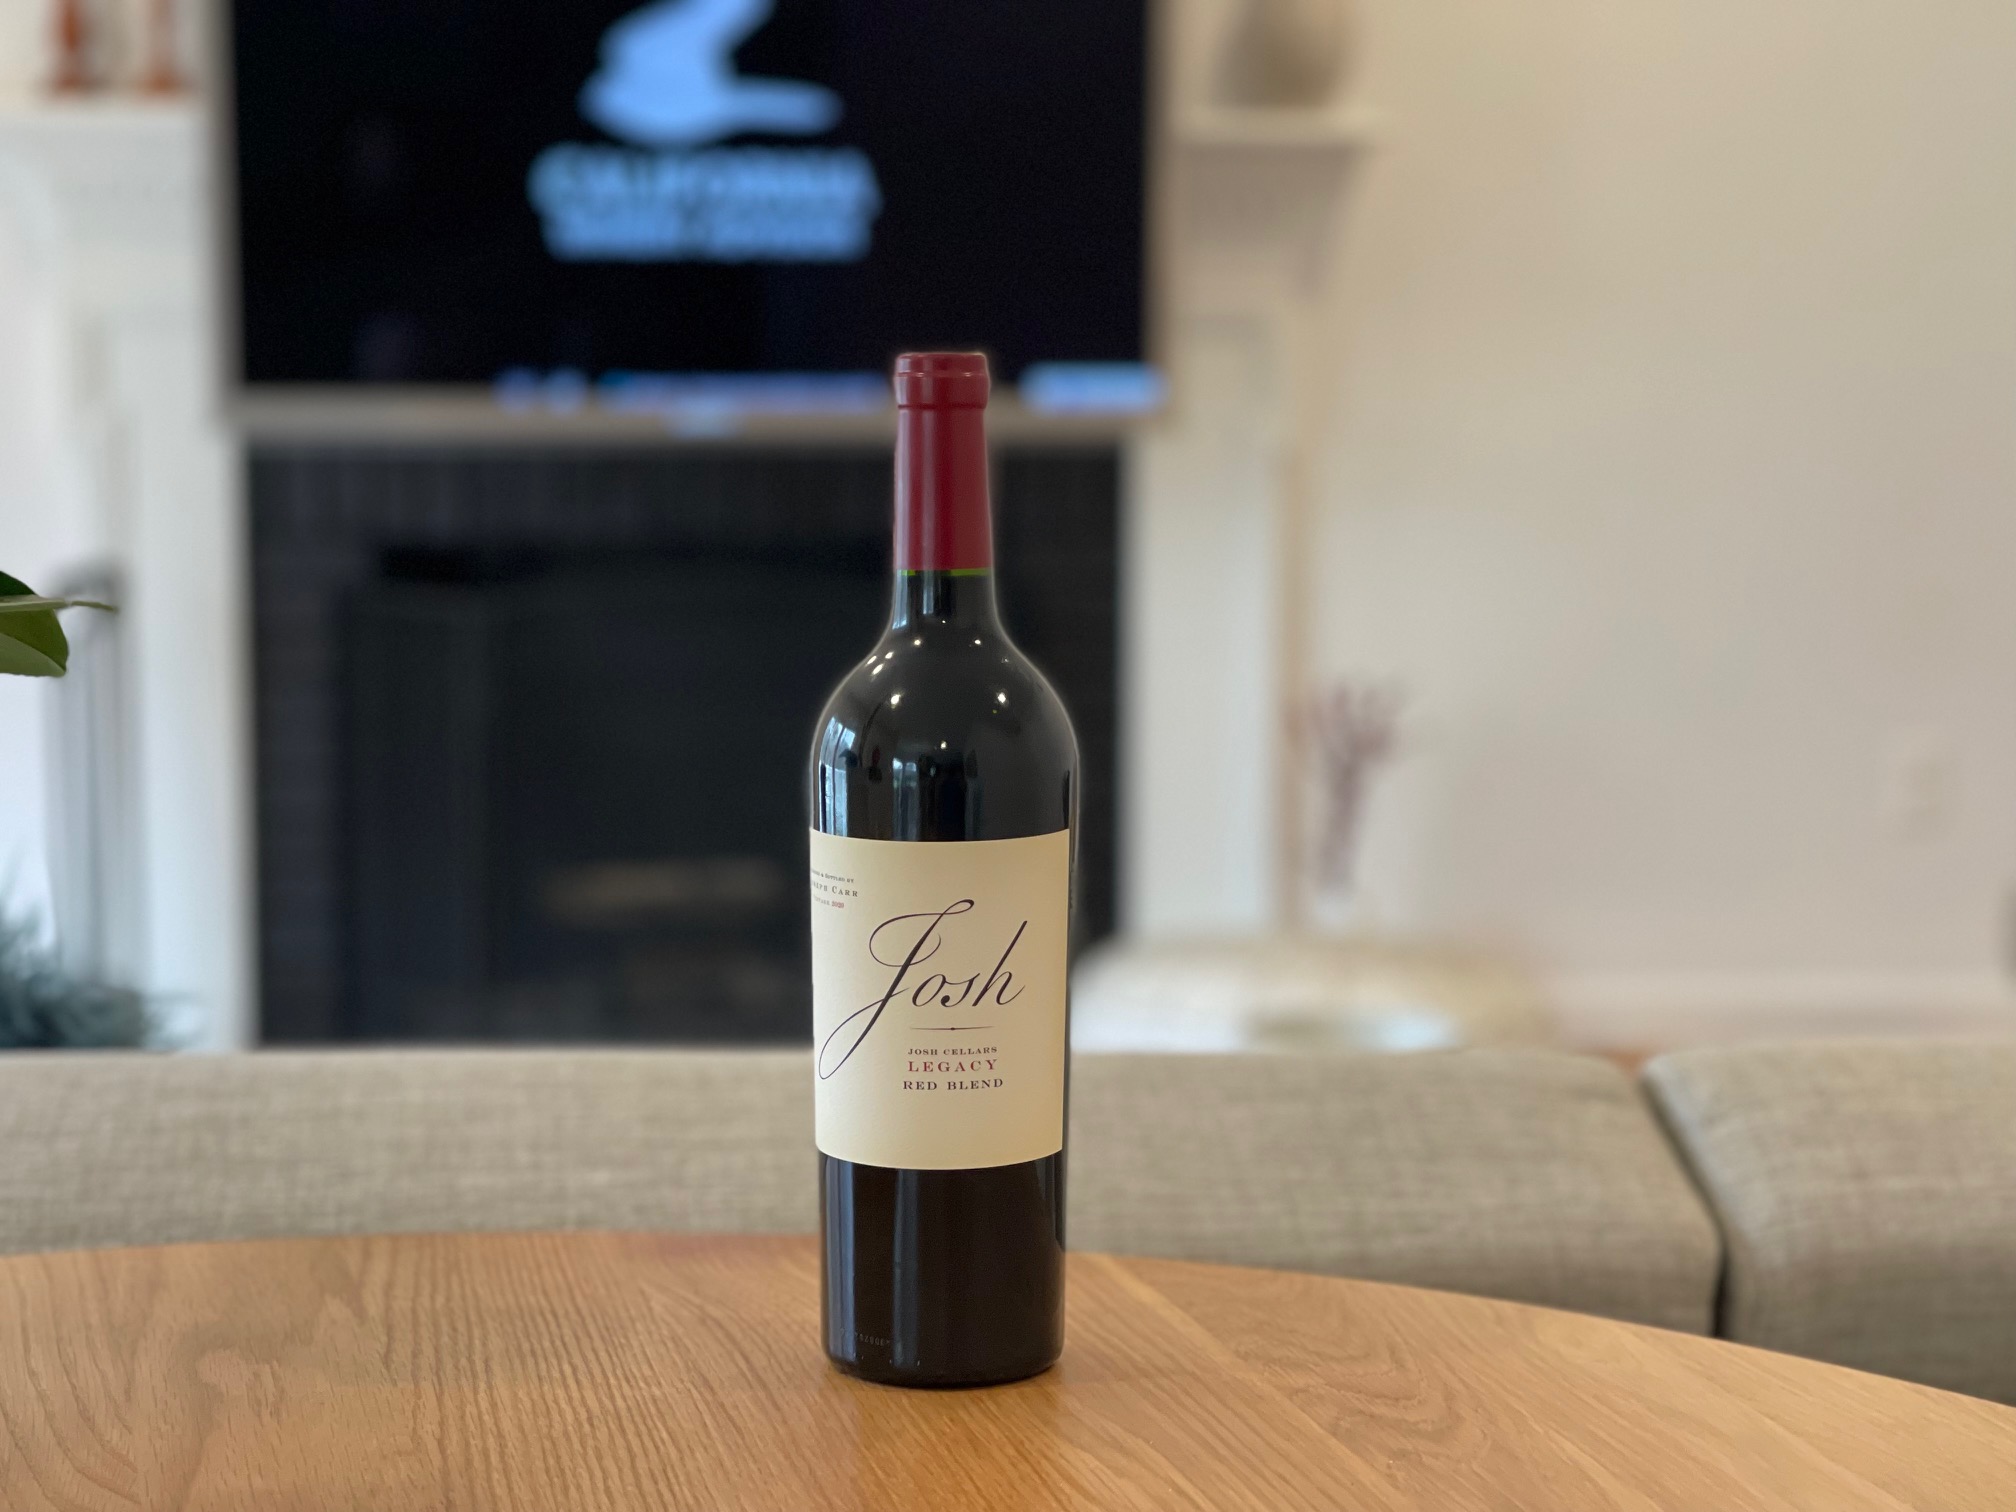 Josh Red Blend Wine Review California Winery Advisor